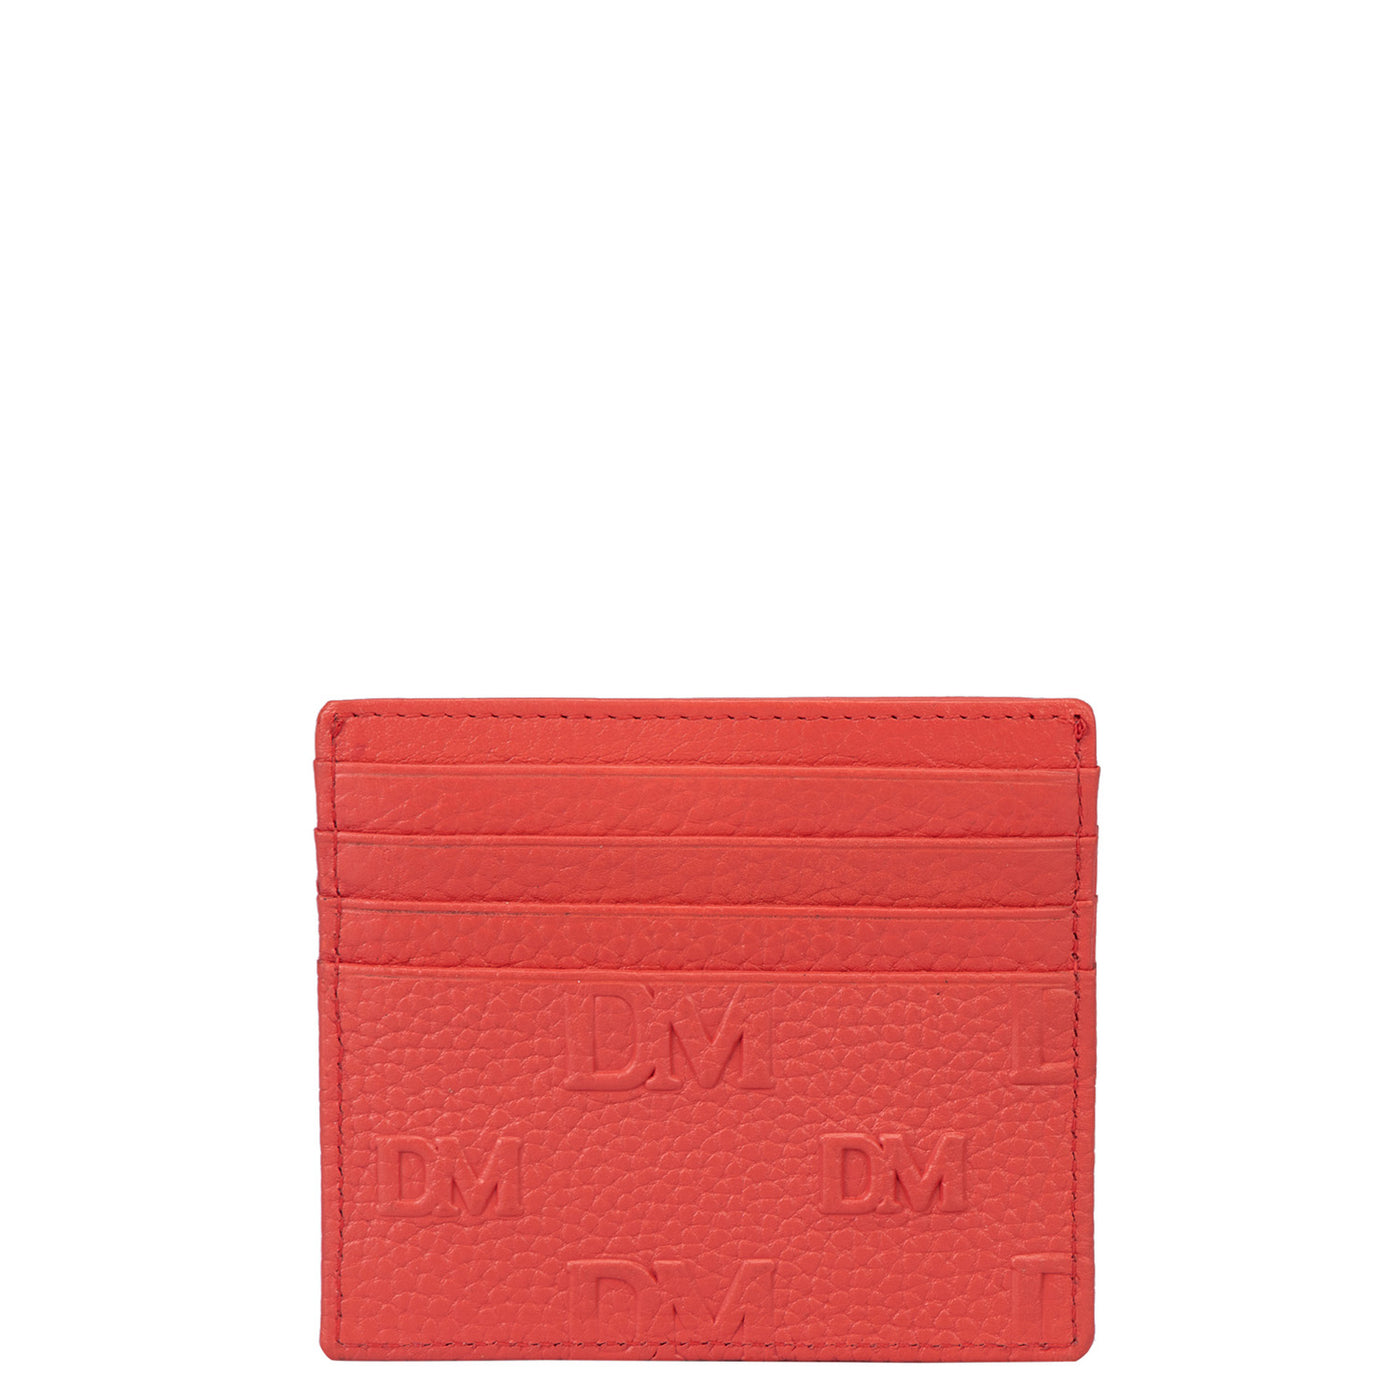 Monogram Wax Leather Card Case - Corallo